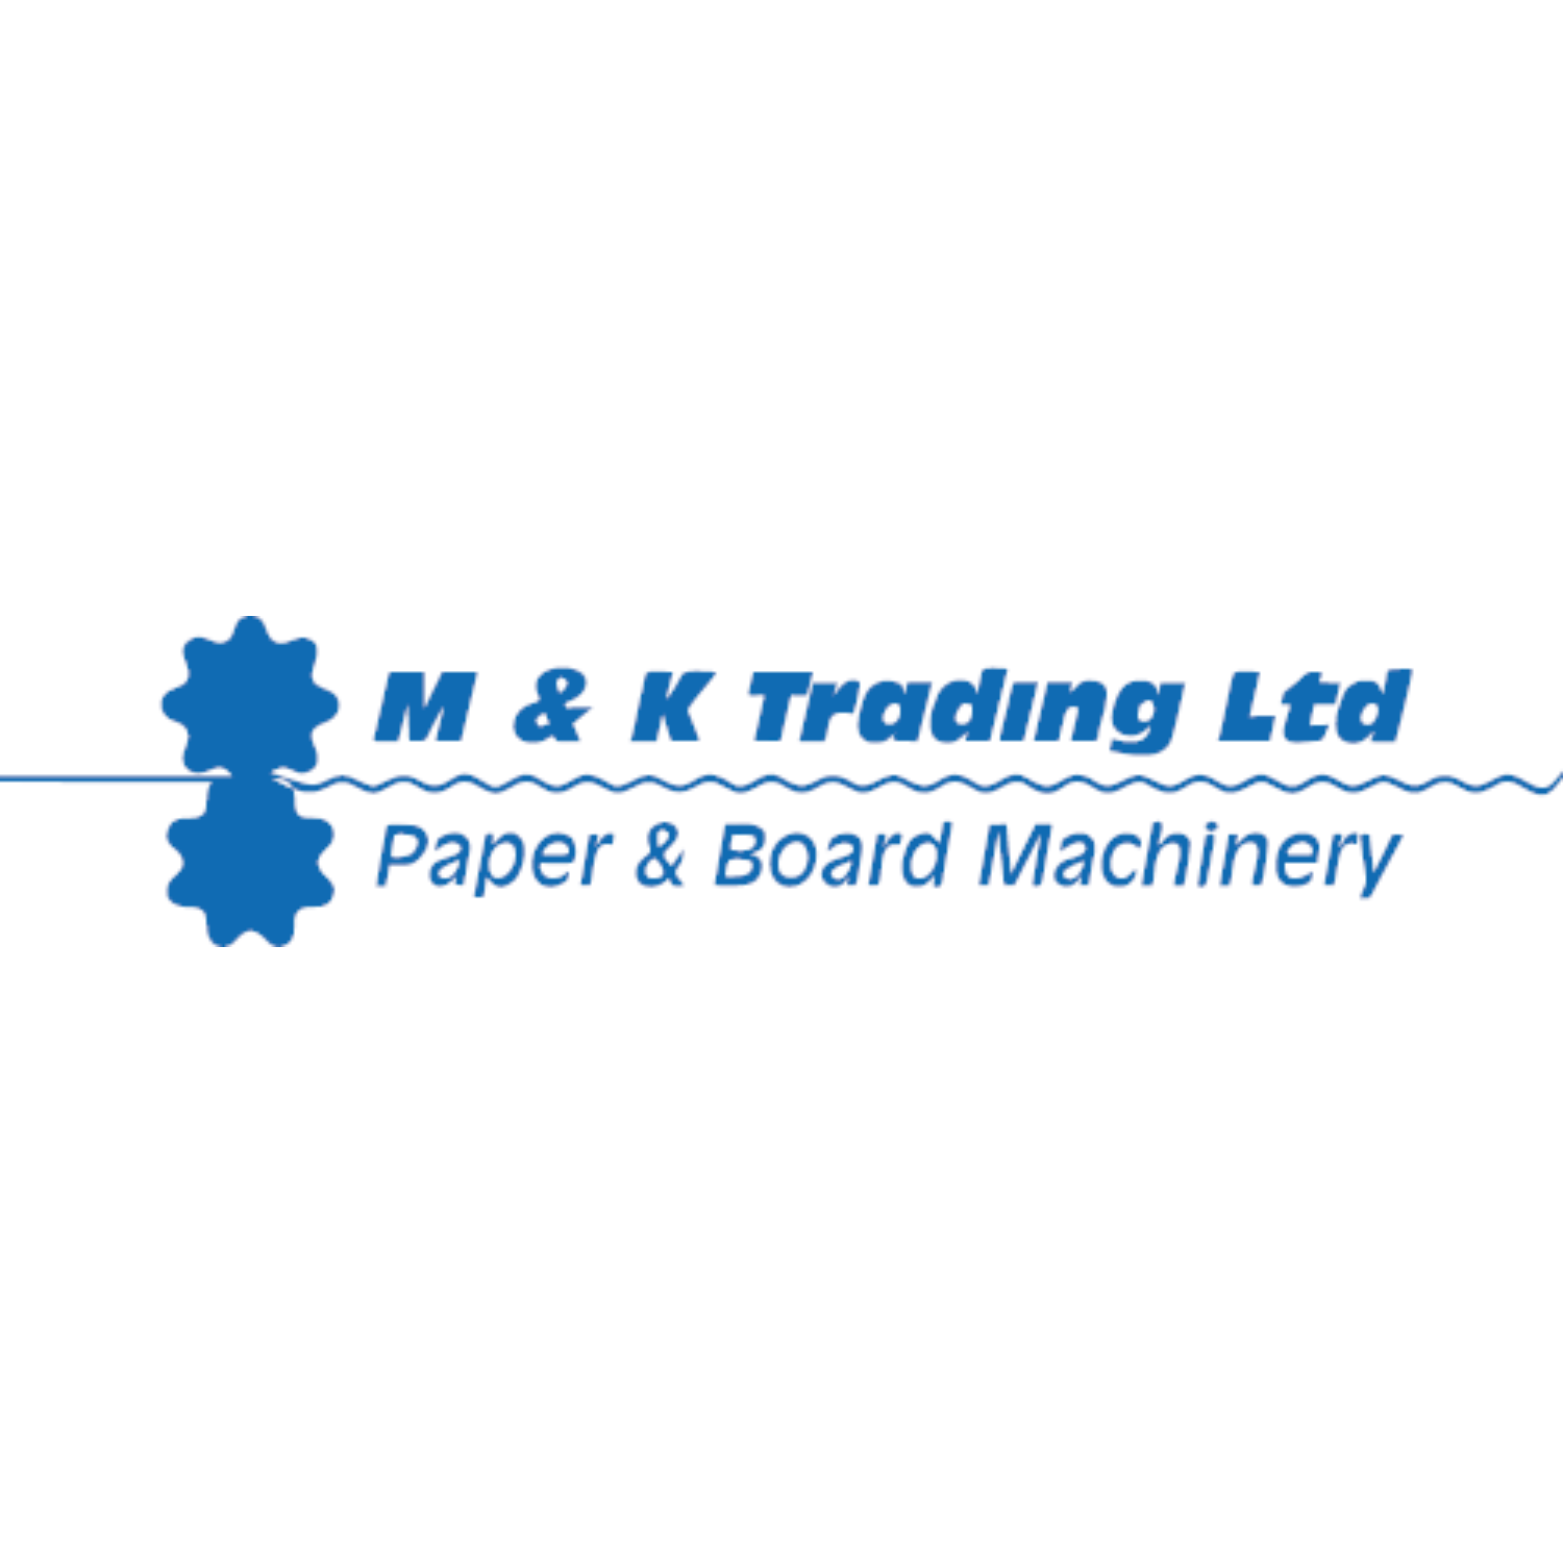 M&K Trading Ltd